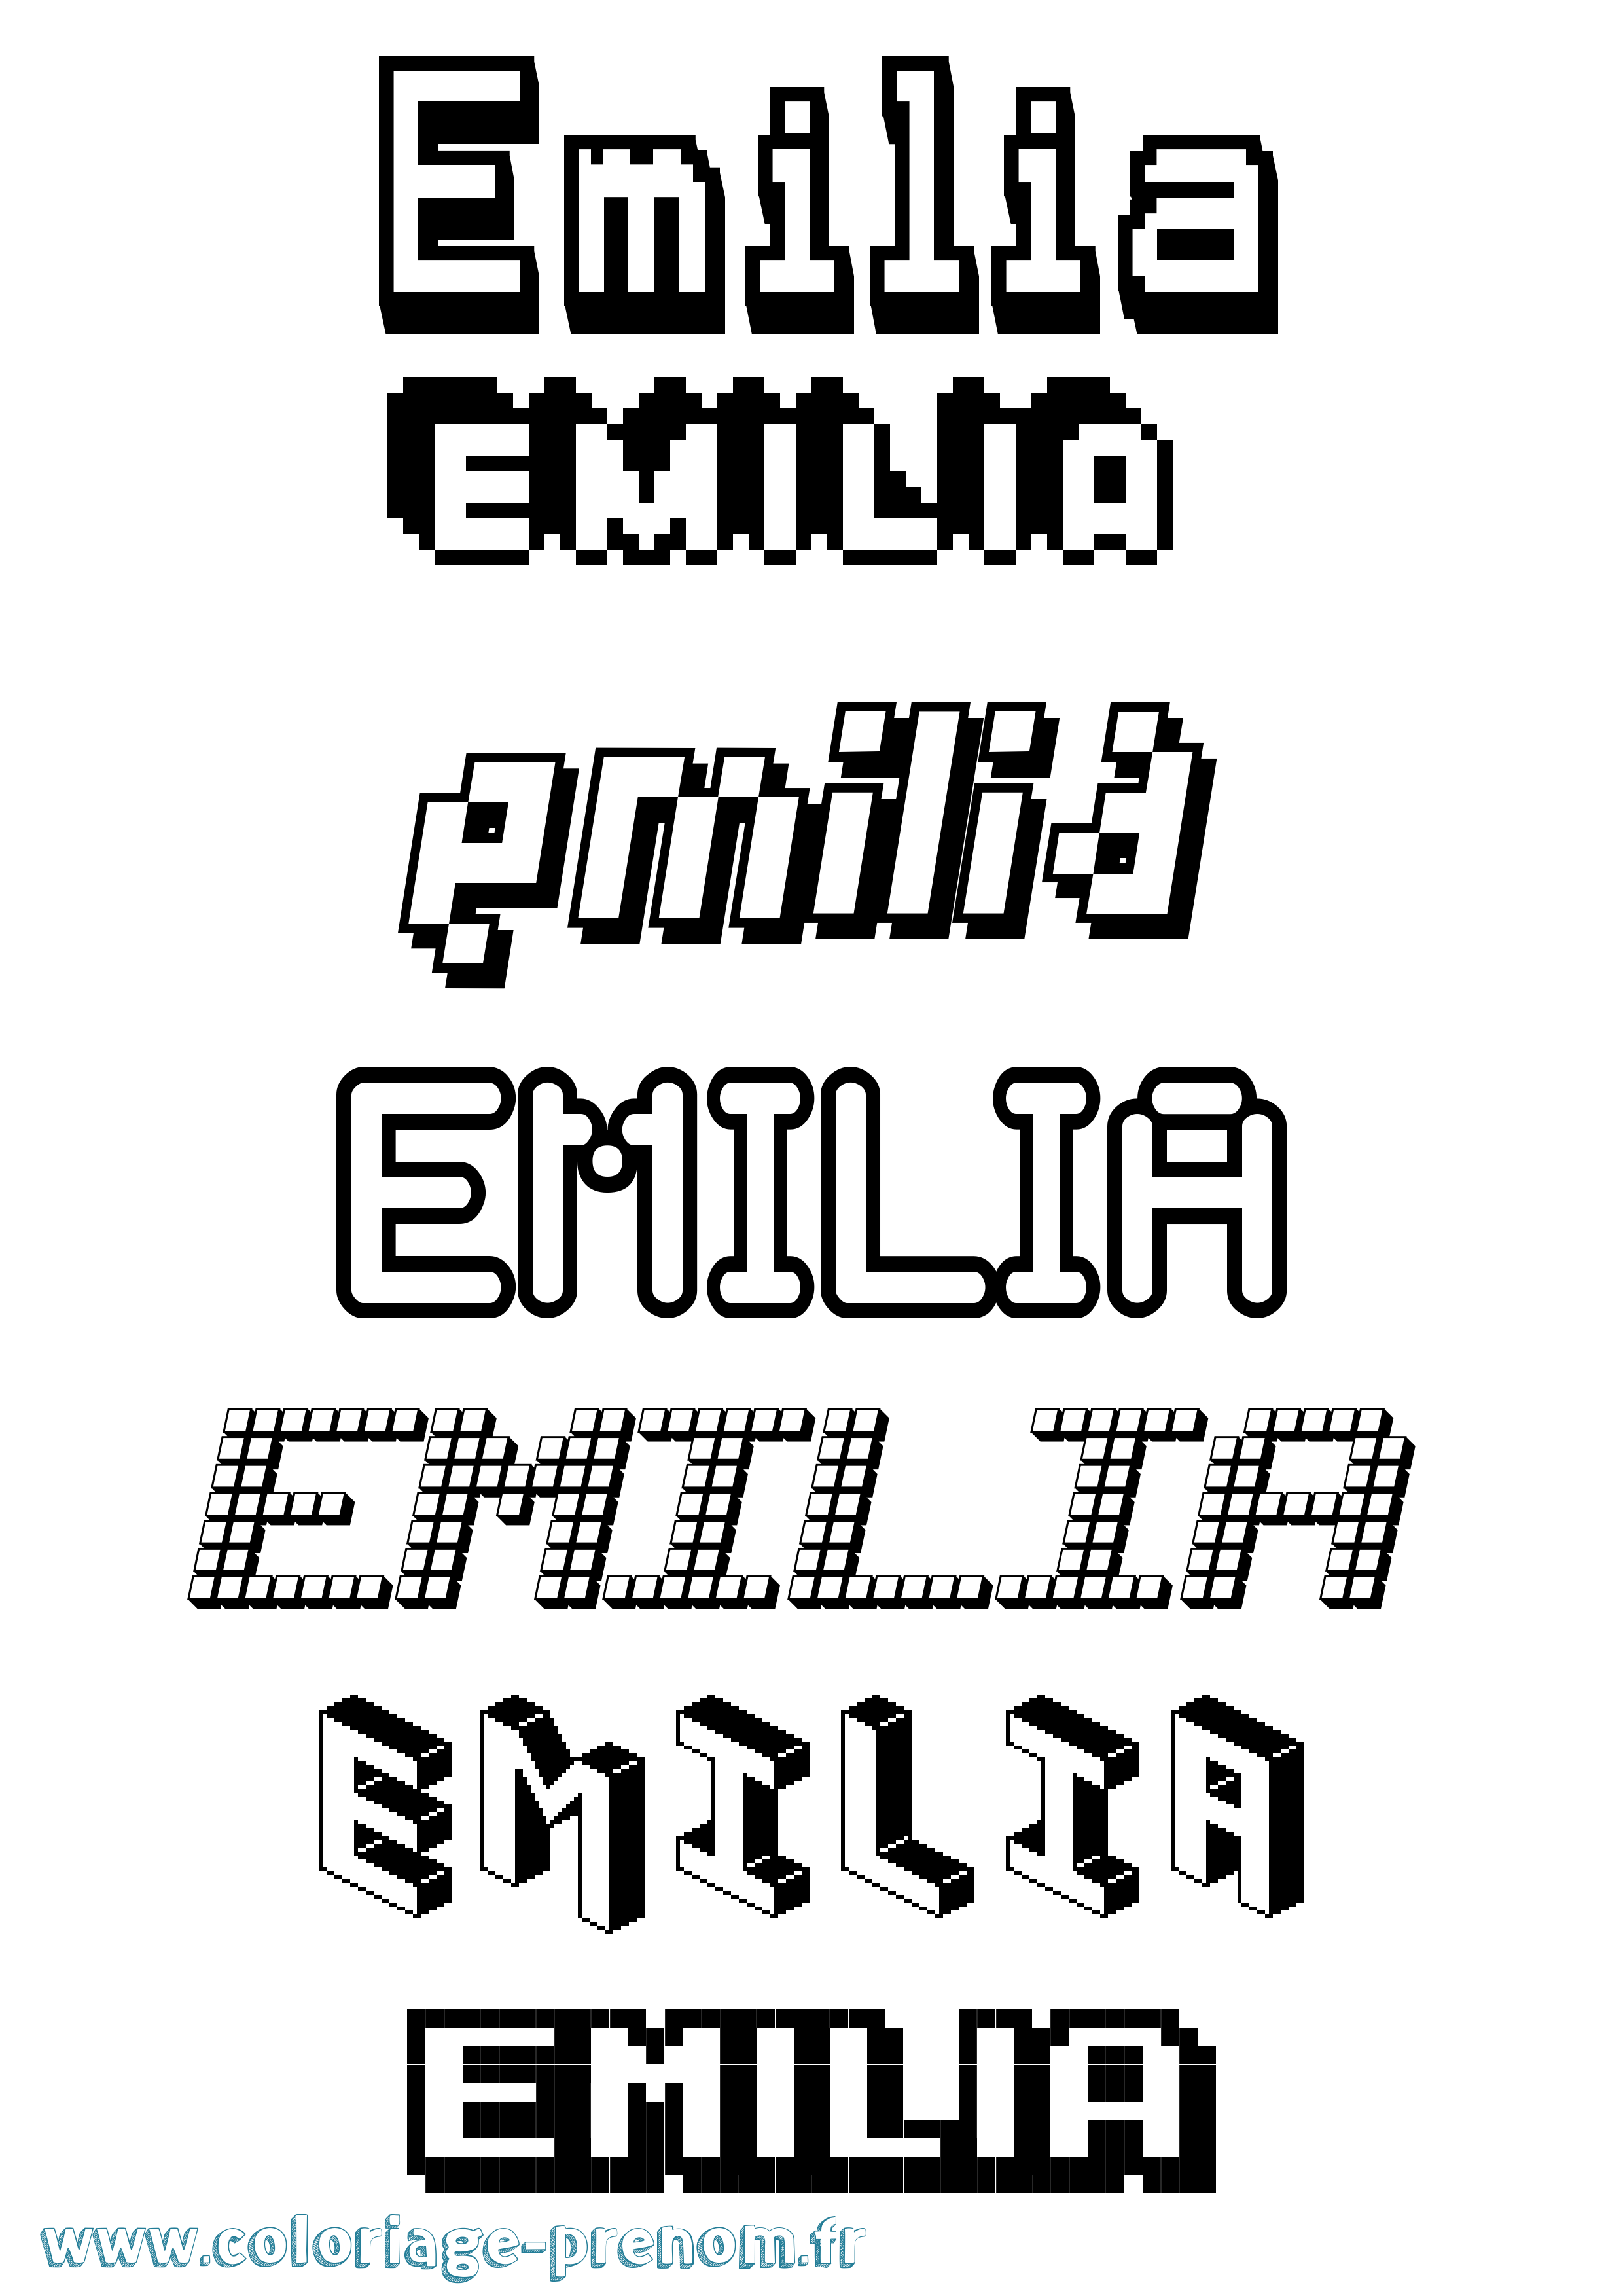 Coloriage prénom Emilia